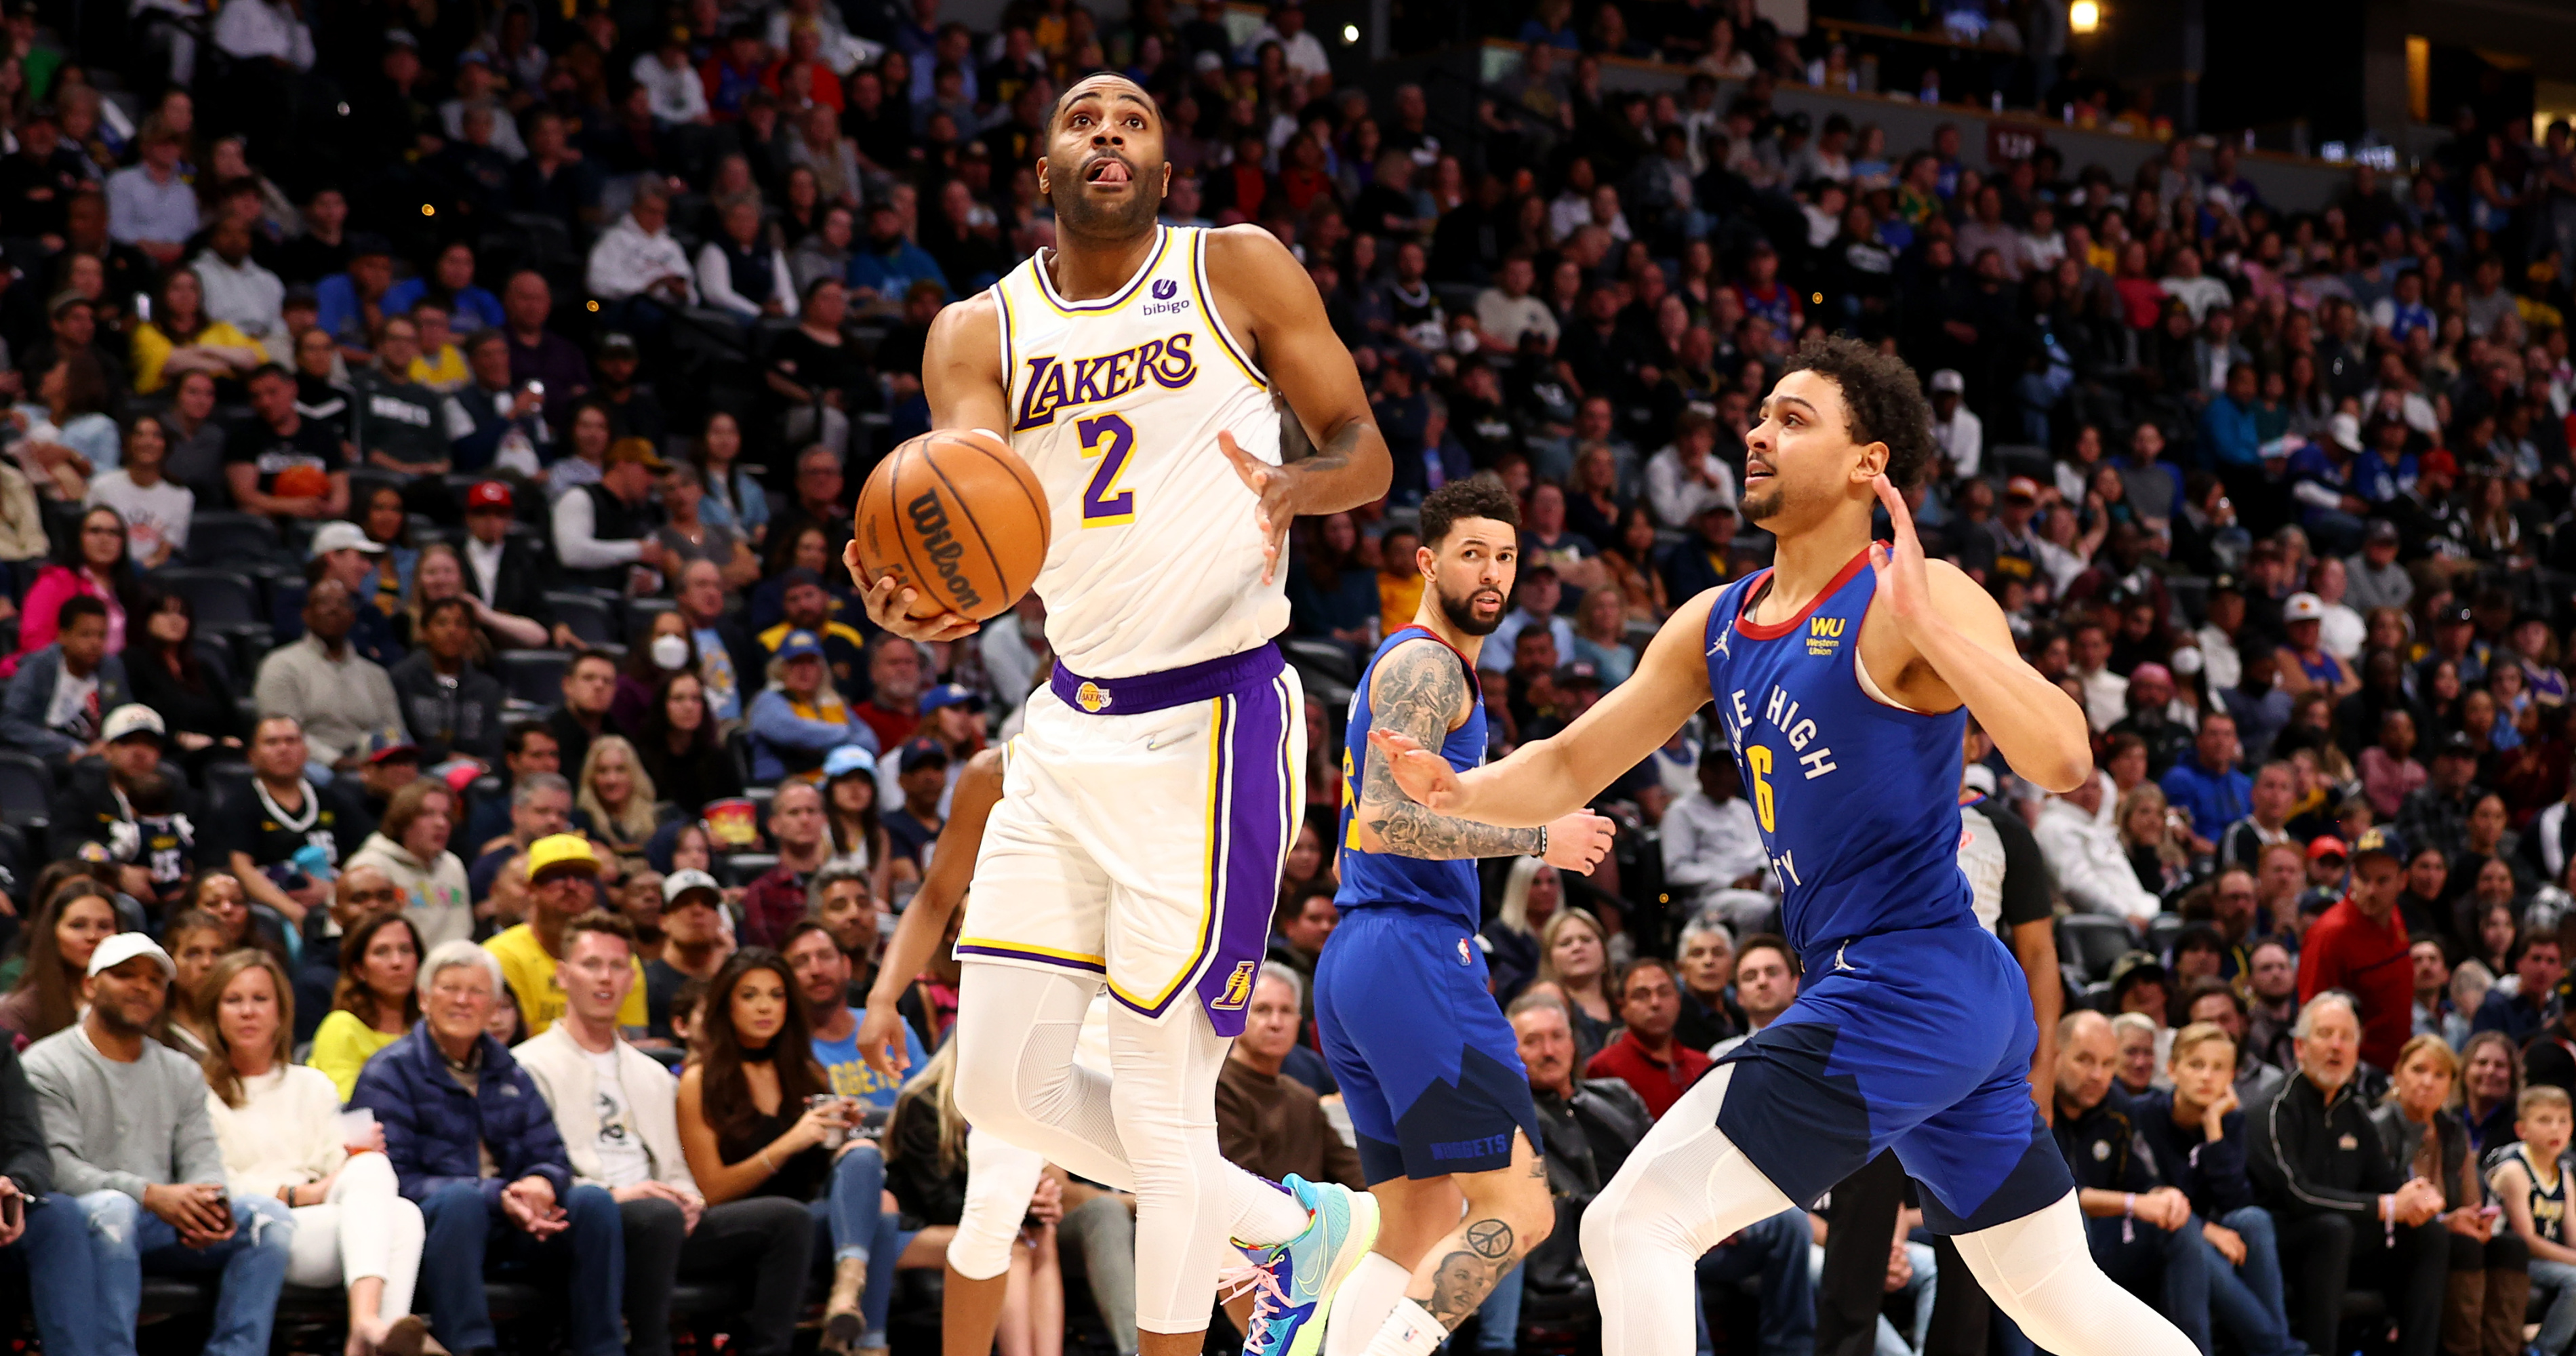 Lakers guard Wayne Ellington shares his pick for NBA MVP